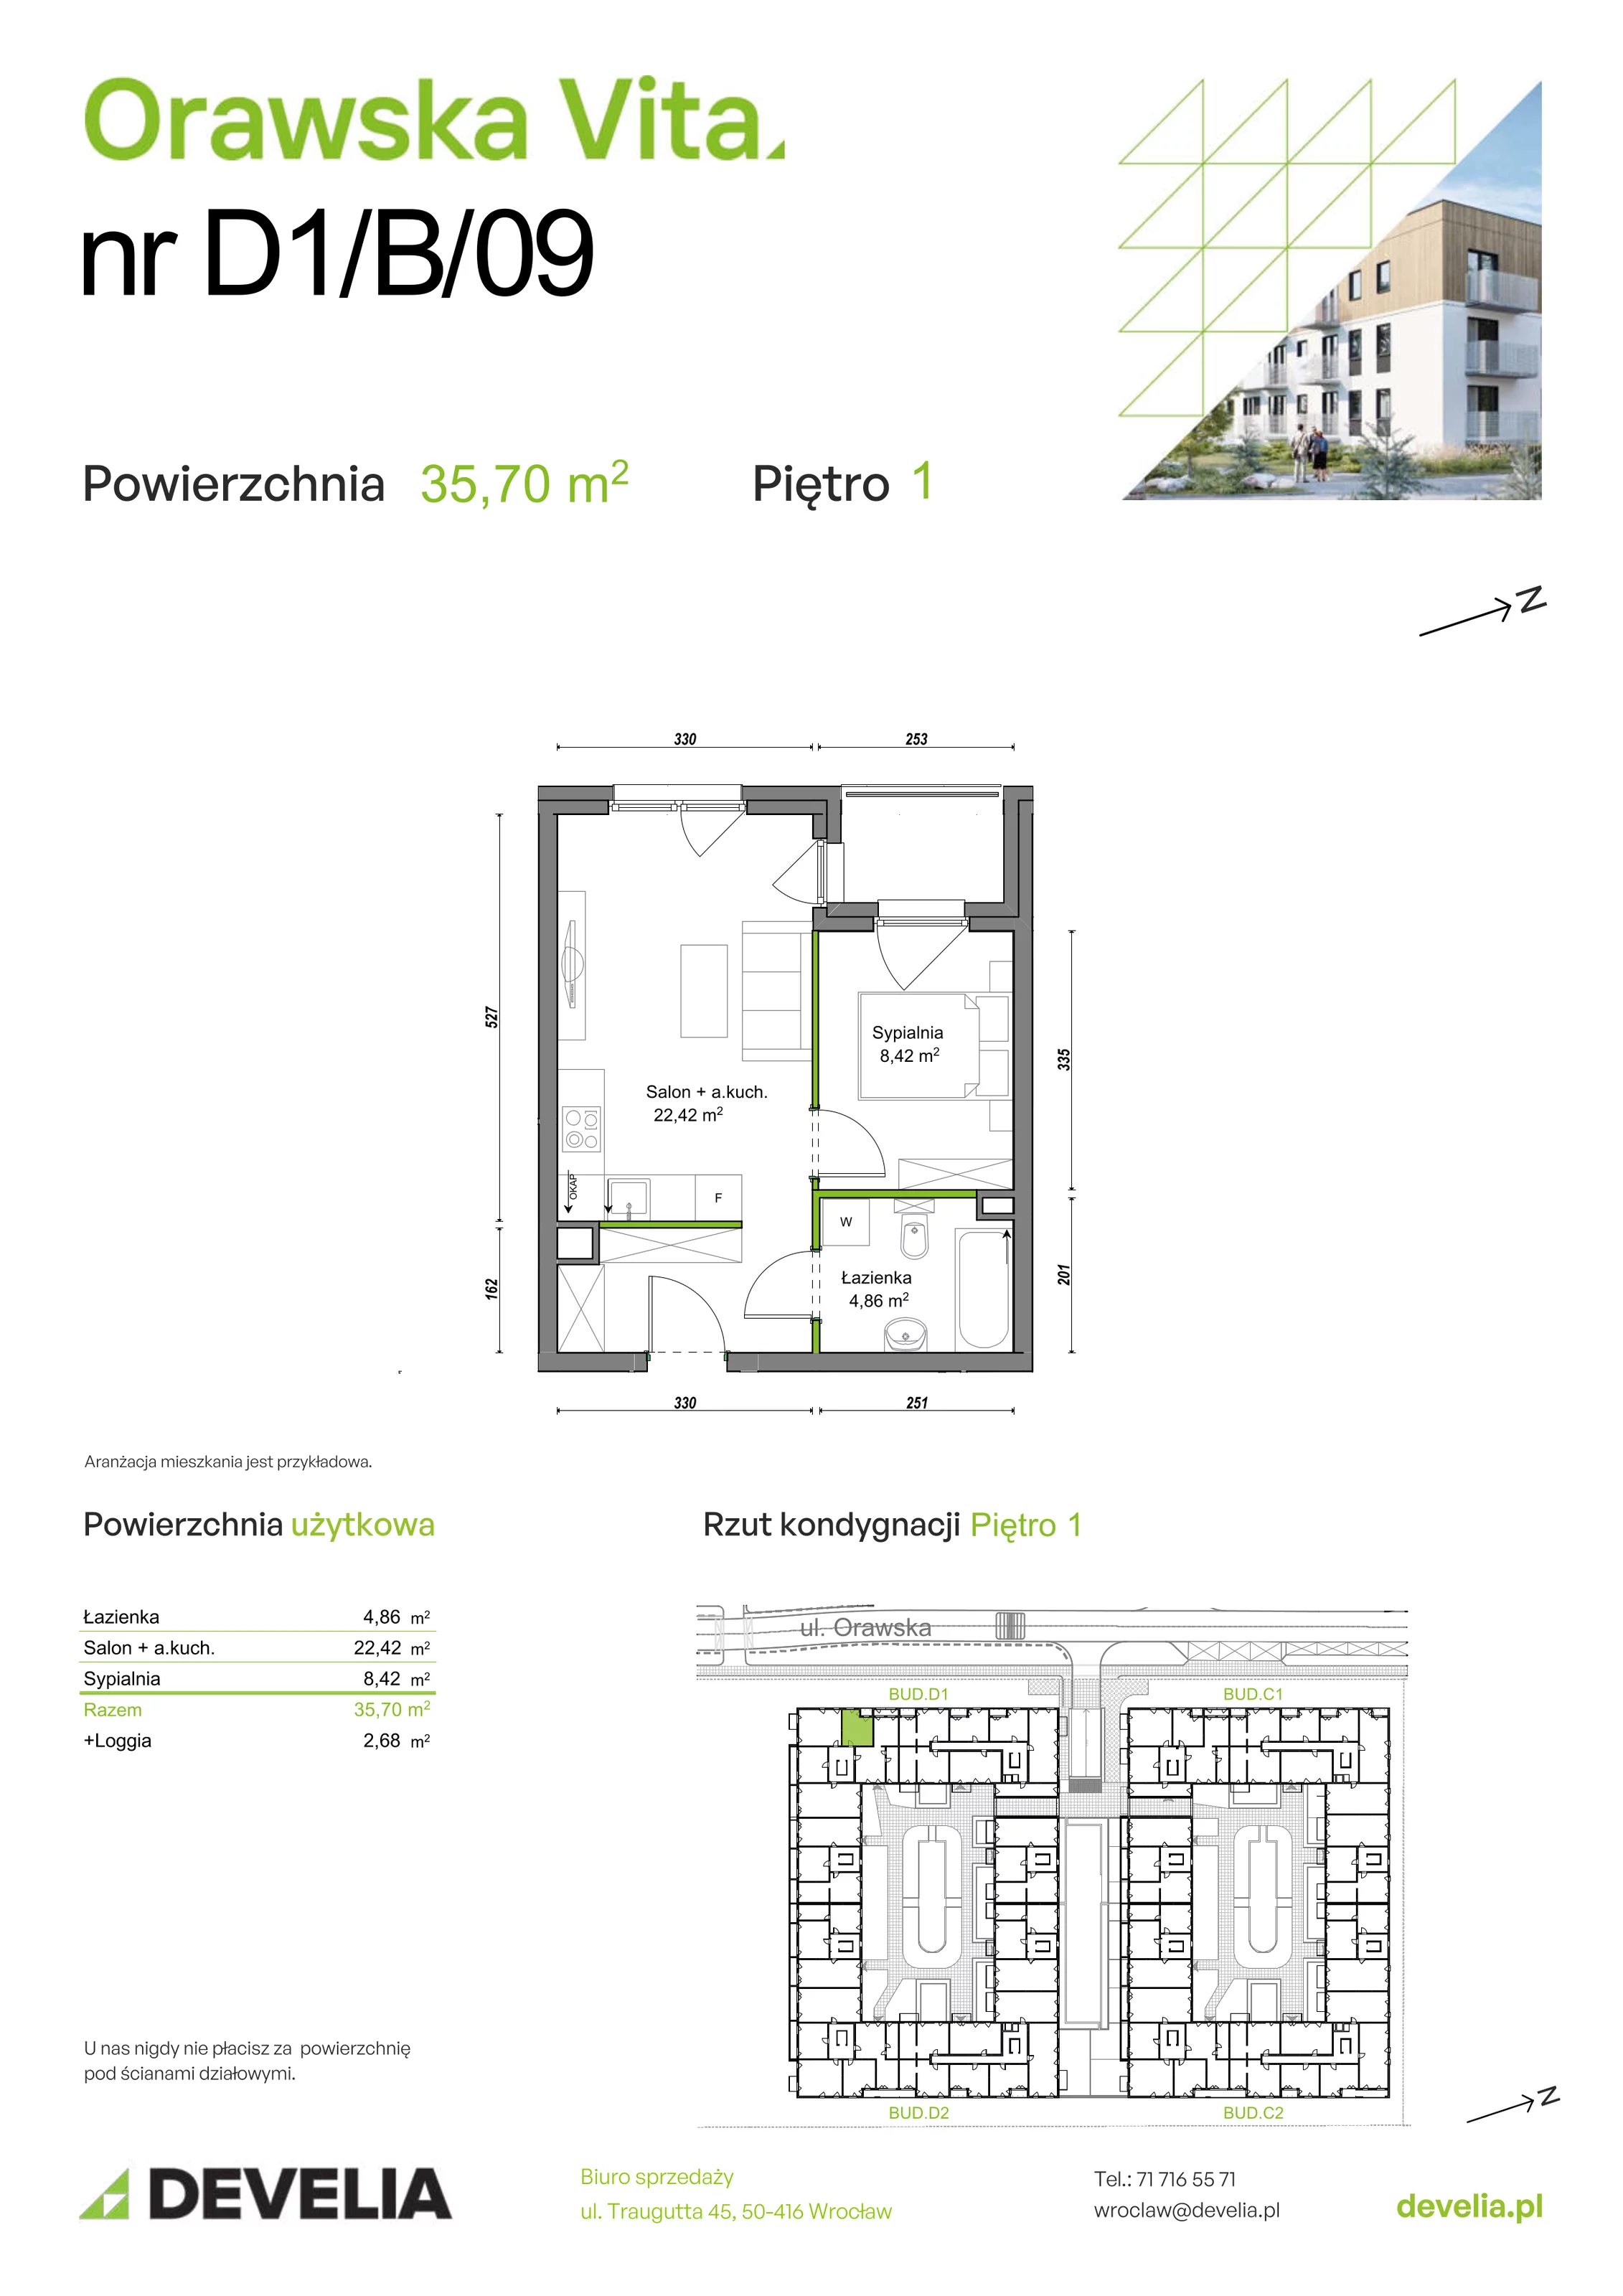 Mieszkanie 35,70 m², piętro 1, oferta nr D1/B/09, Orawska Vita, Wrocław, Ołtaszyn, Krzyki, ul. Orawska 73